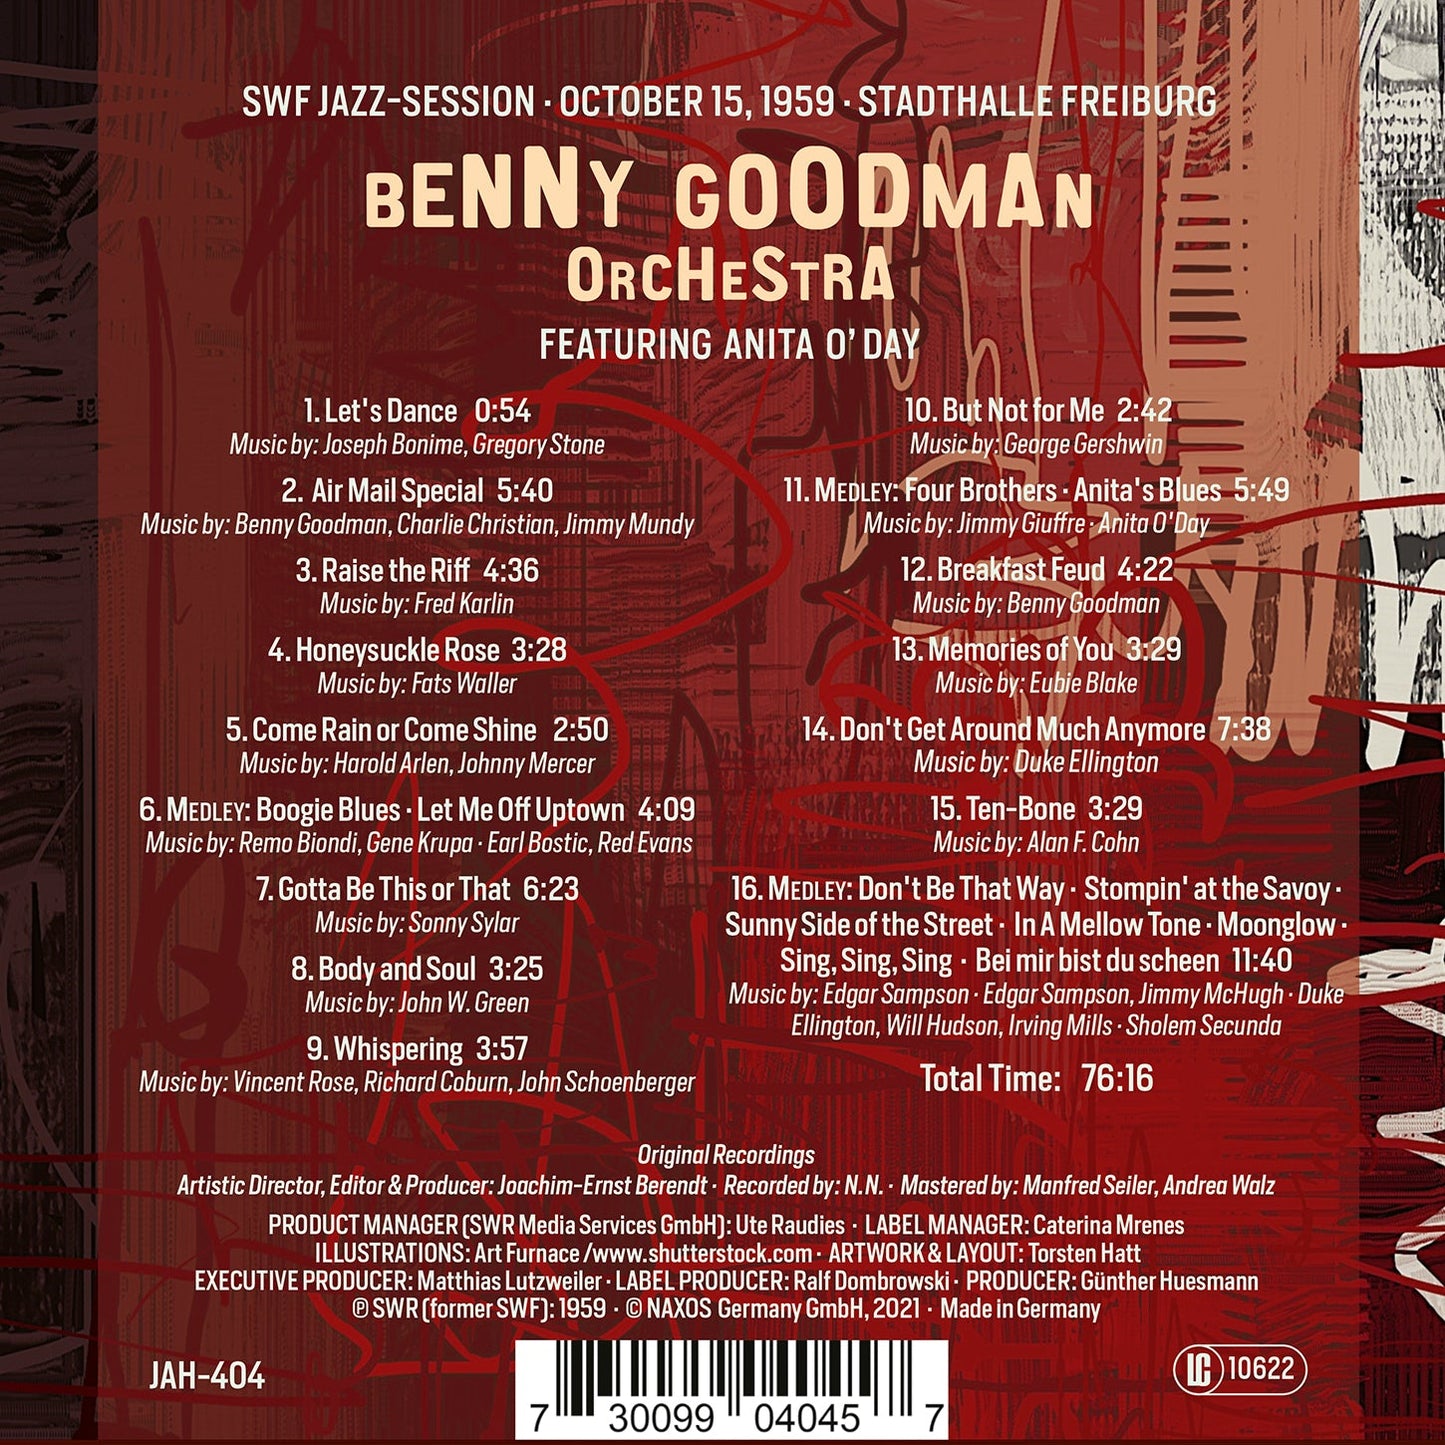 Benny Goodman Orchestra Feat. Anita O'Day (Live)